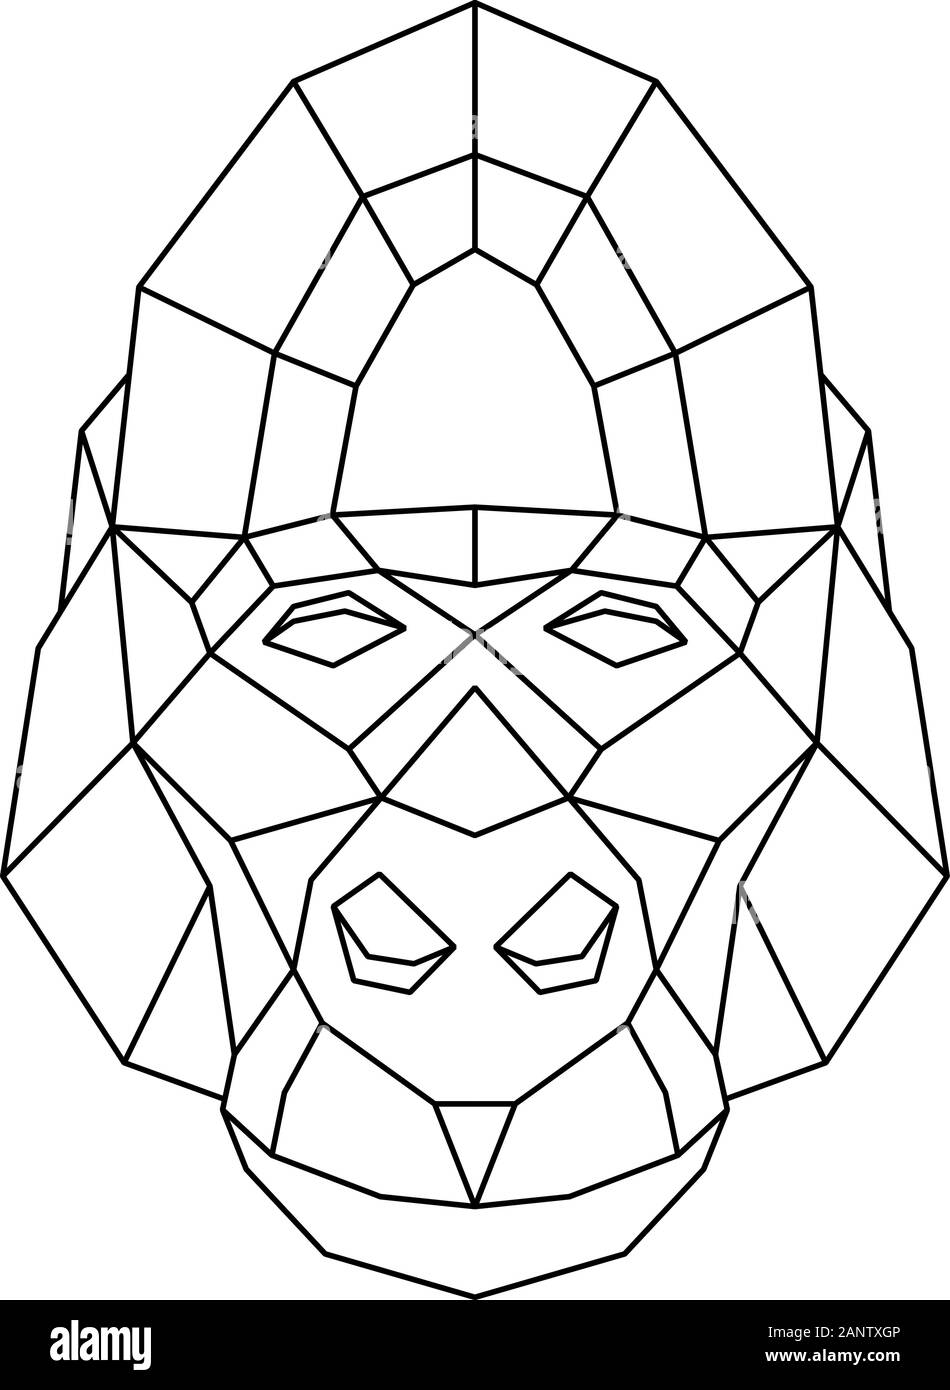 Abstract polygonal head of gorilla. Geometric vector illustration. Stock Vector